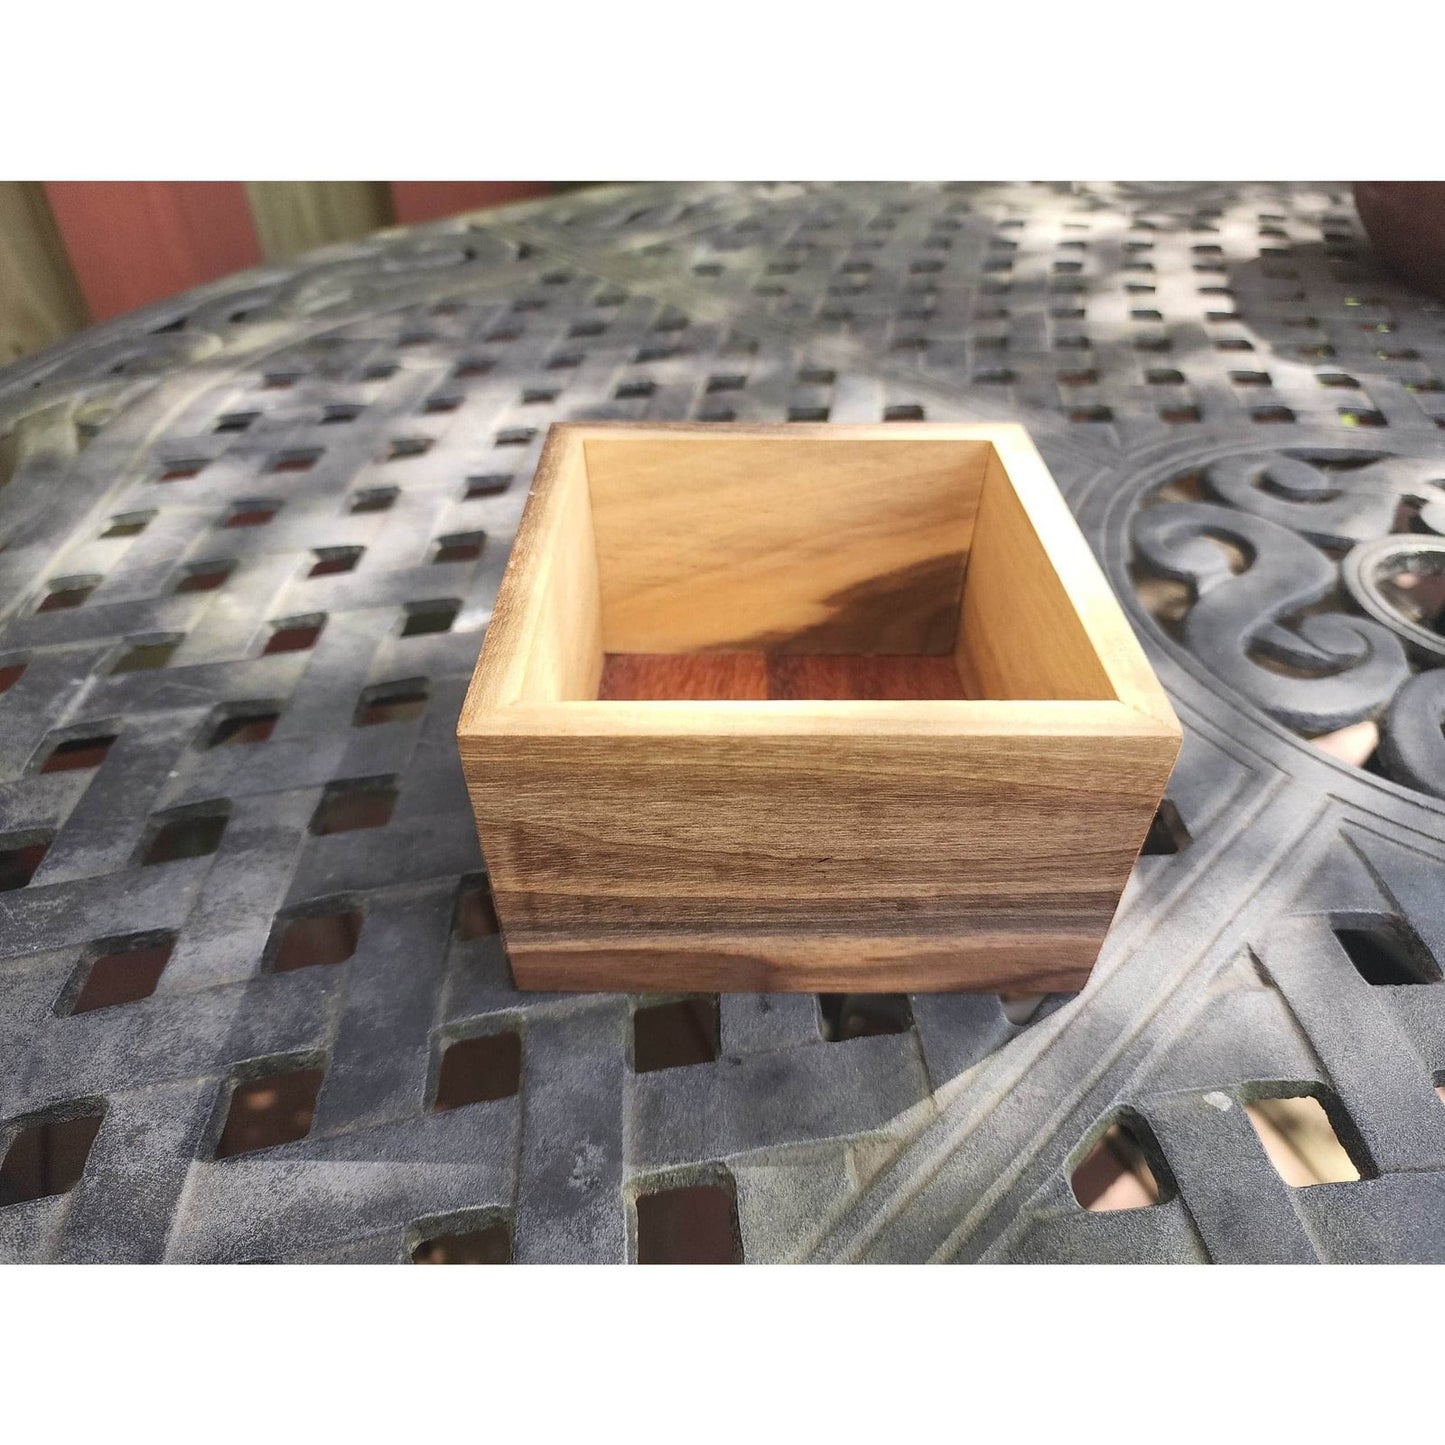 Handcrafted Walnut Box